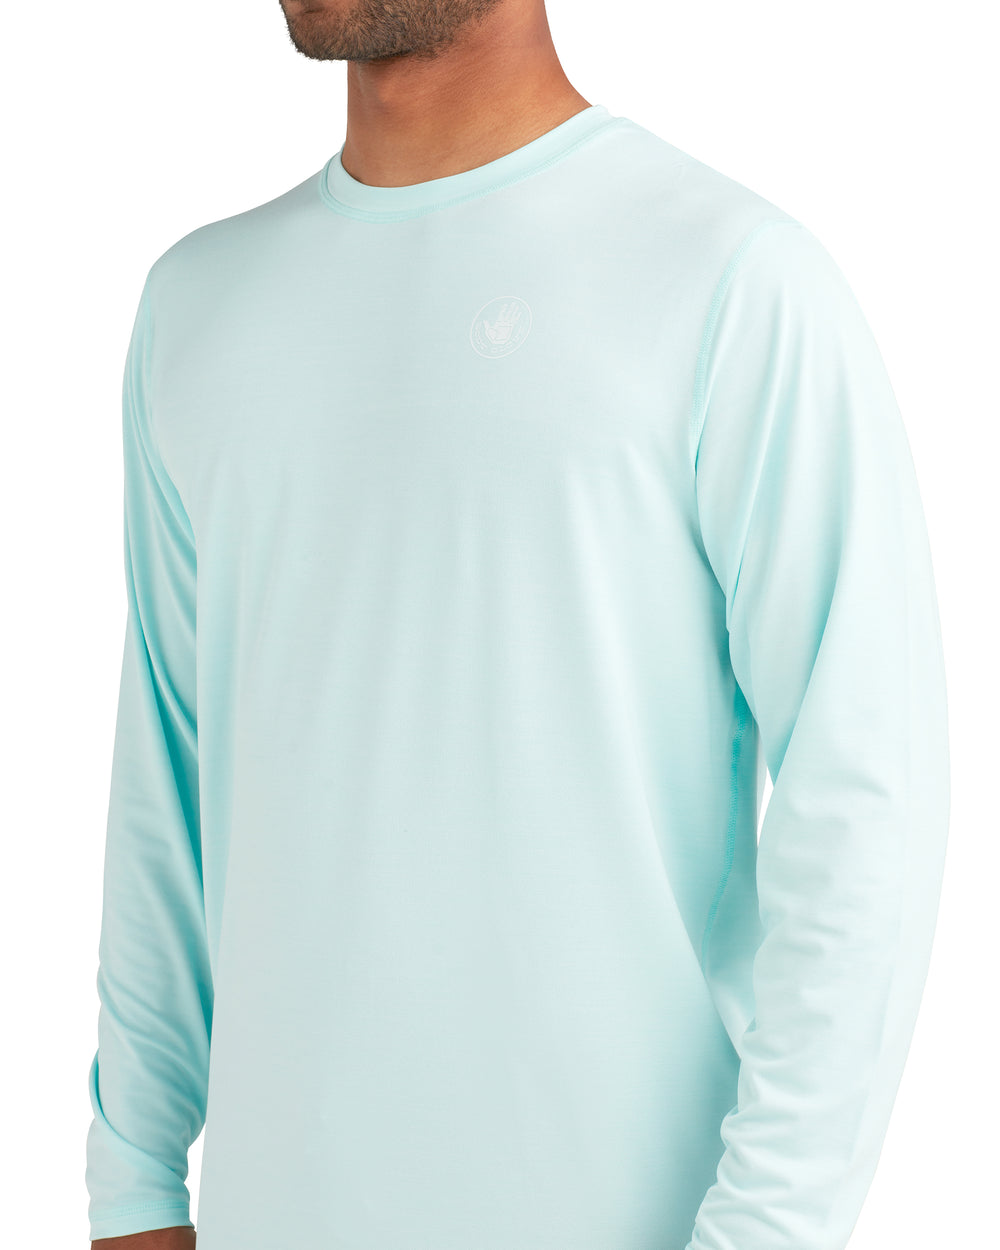 Offshore Pro UPF Long-Sleeve Shirt - Light Blue